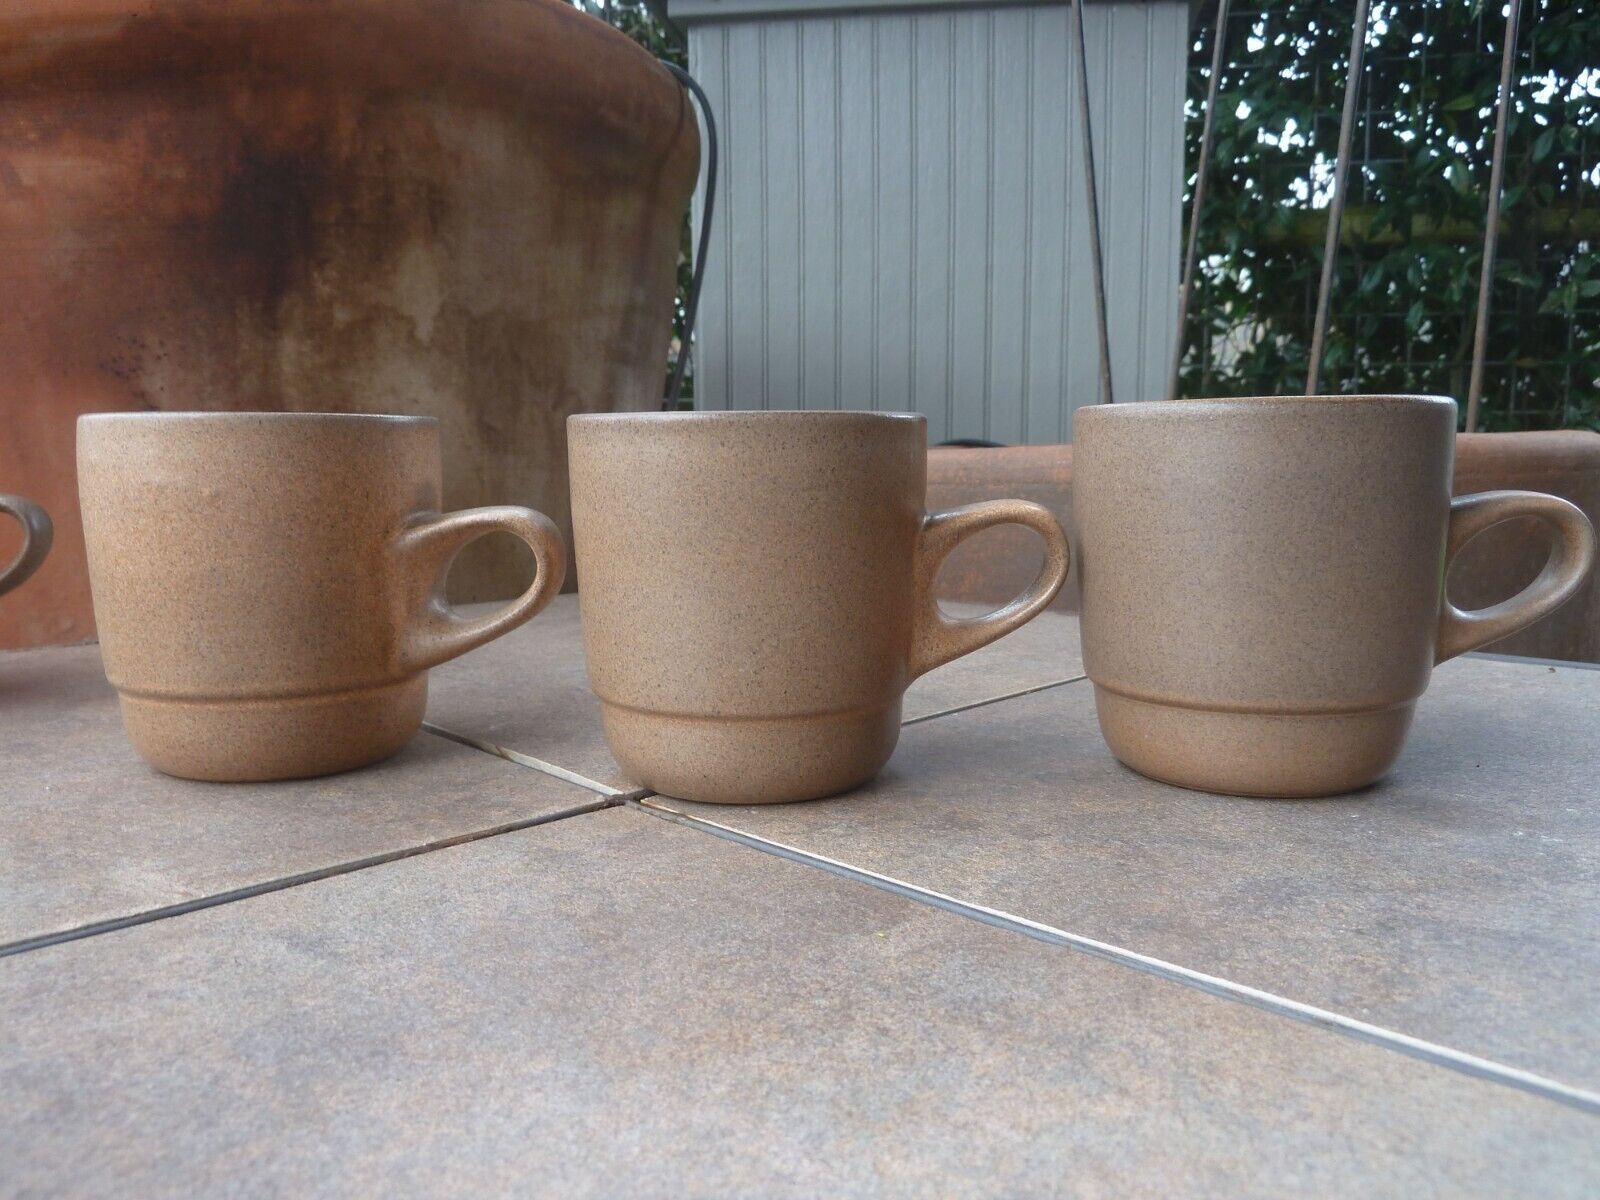 3 HEATH POTTERY MCM Ceramics Stackable Coffee Mug Cup Sandalwood Taupe Brown